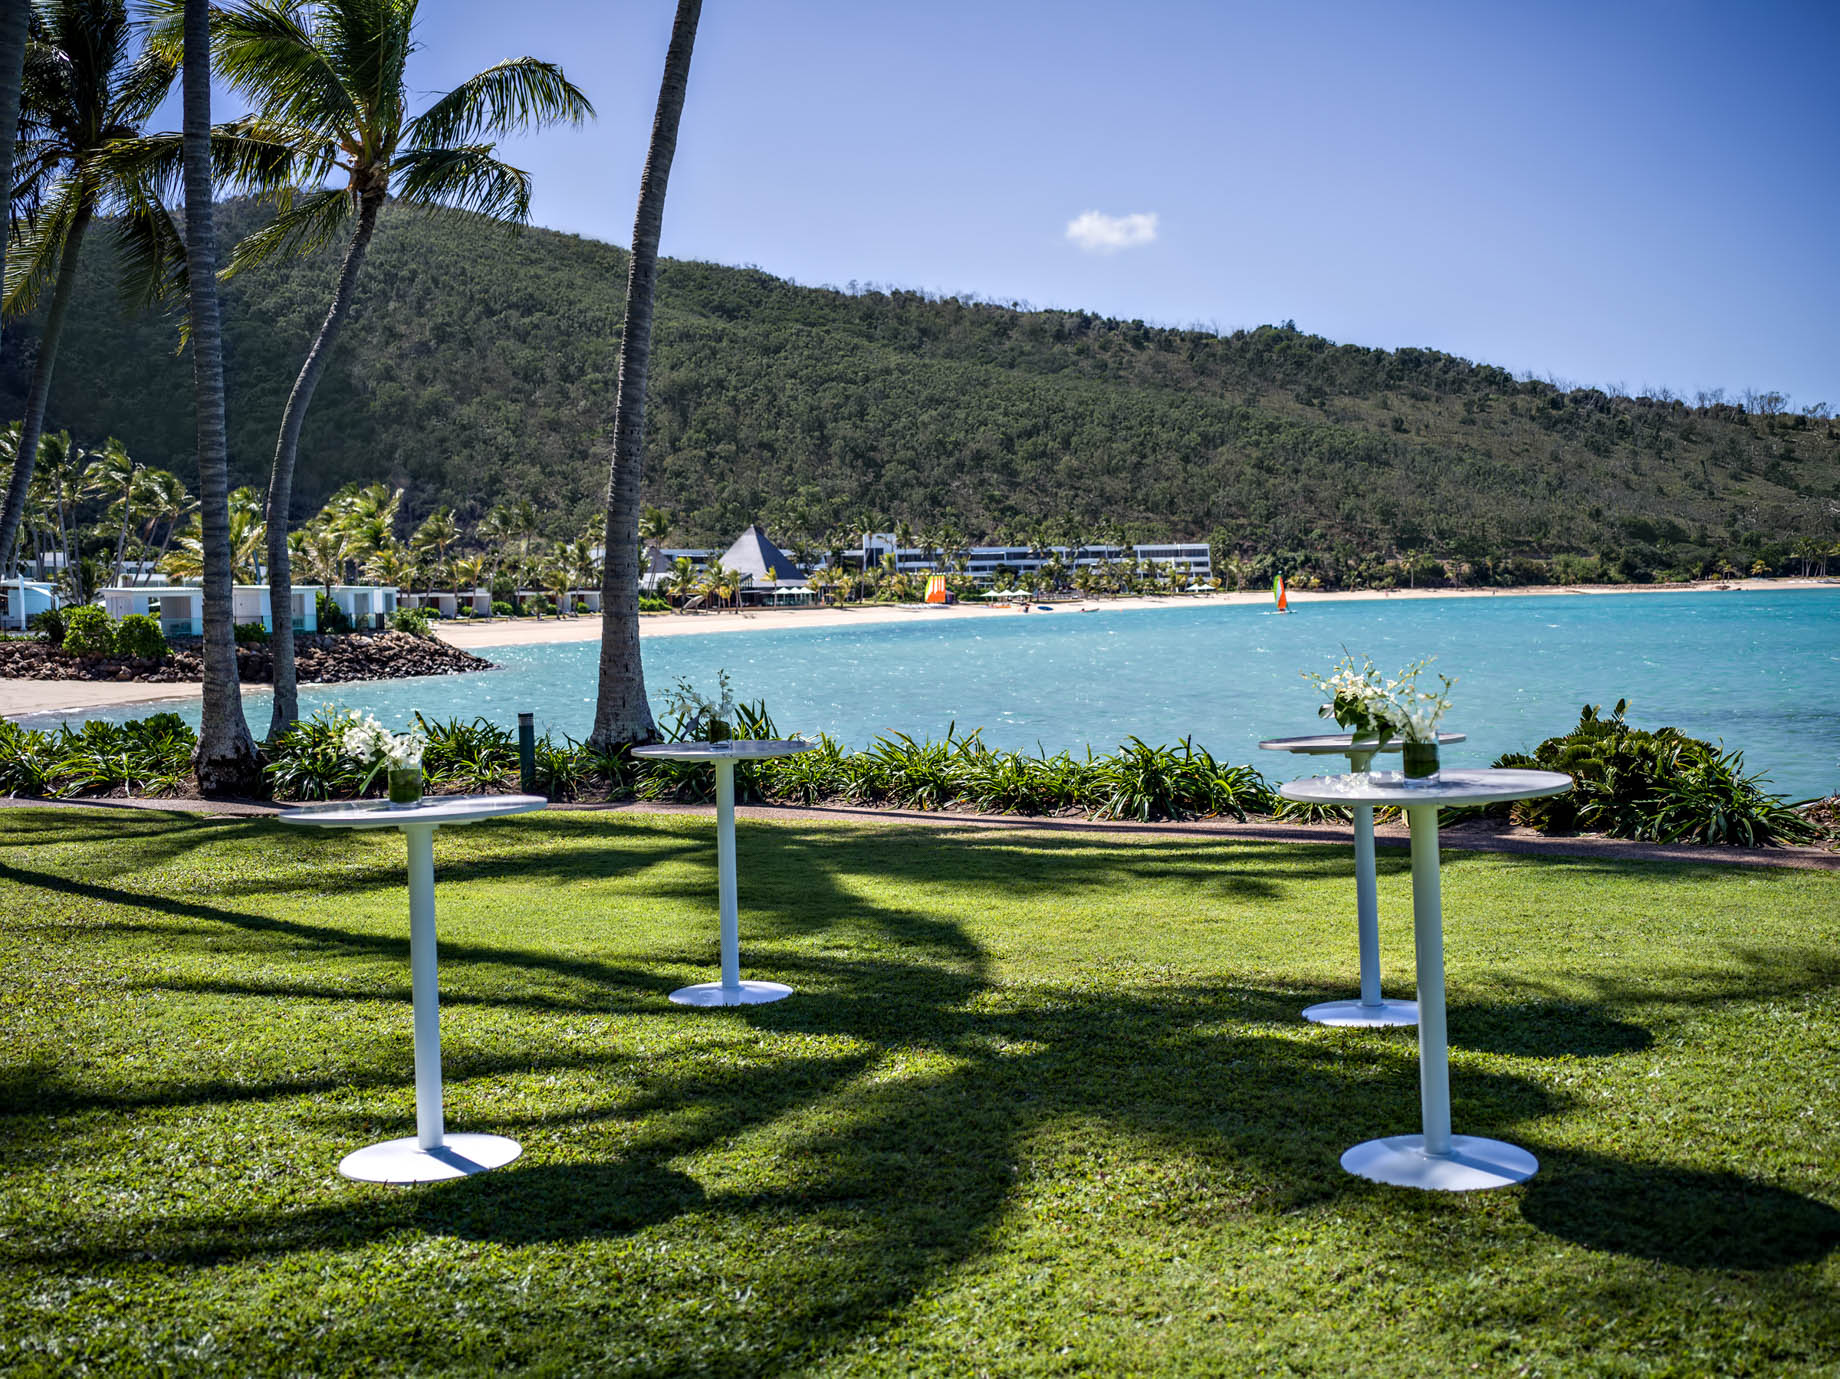 InterContinental Hayman Island Resort – Whitsunday Islands, Australia – Cocktail Event Coconut Grove